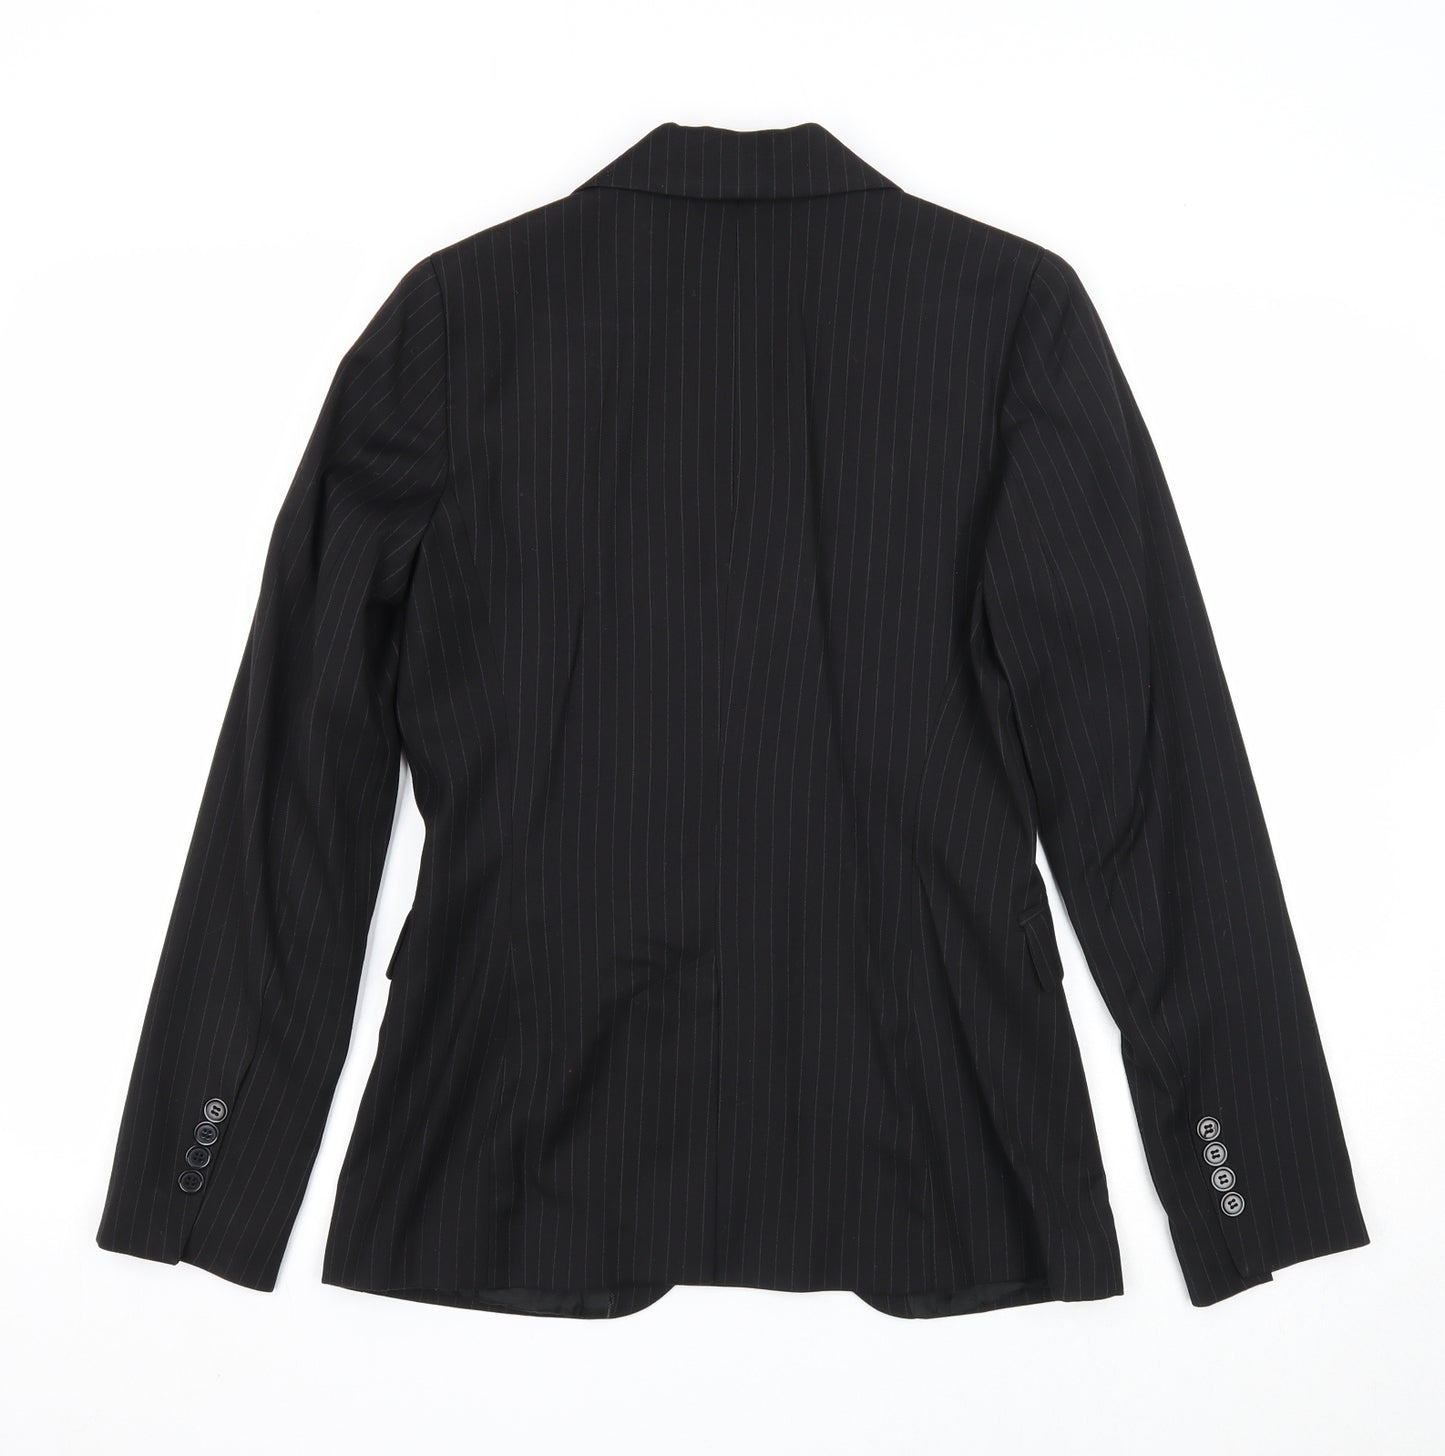 Yumi Womens Black Striped Polyester Jacket Blazer Size 12